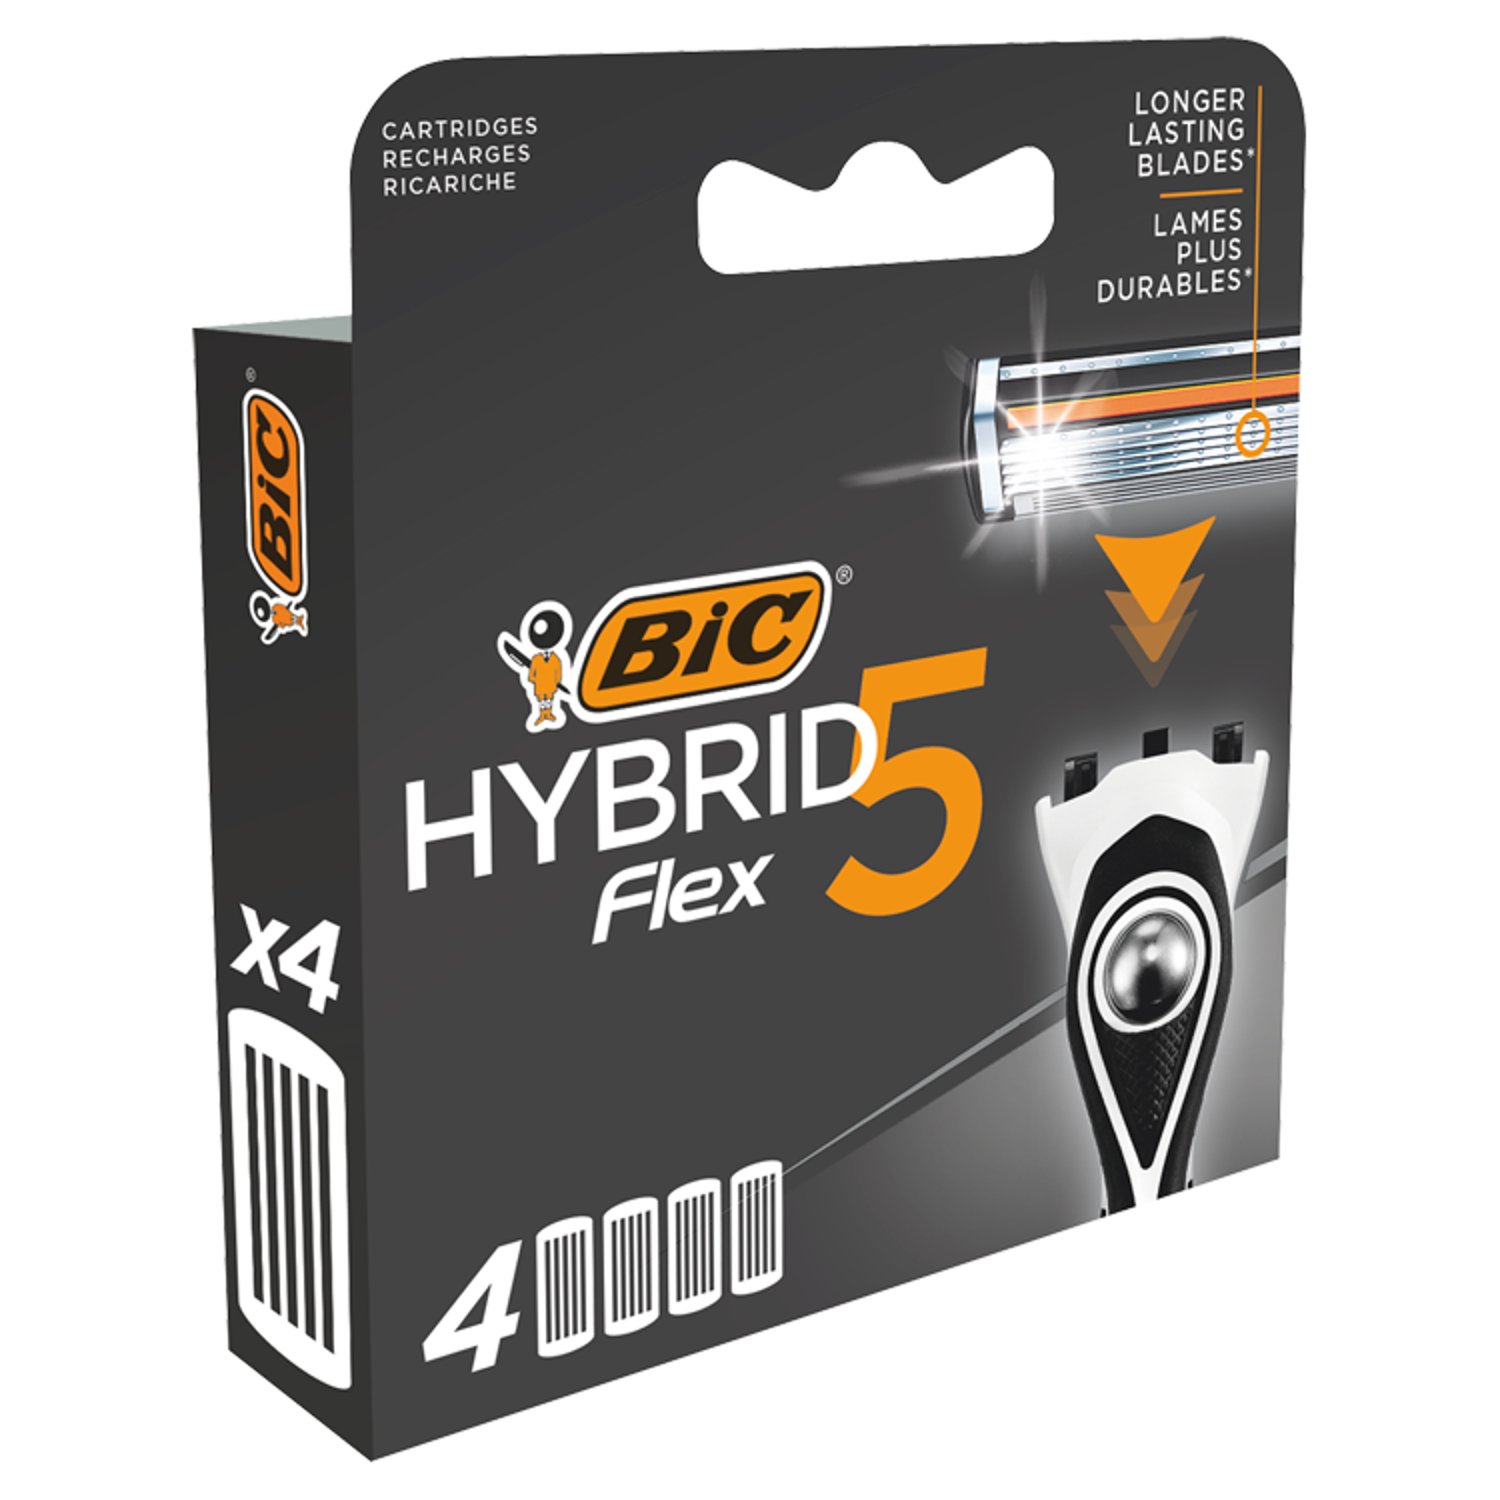 Bic Hybrid 5 Flex 4 Blade Count